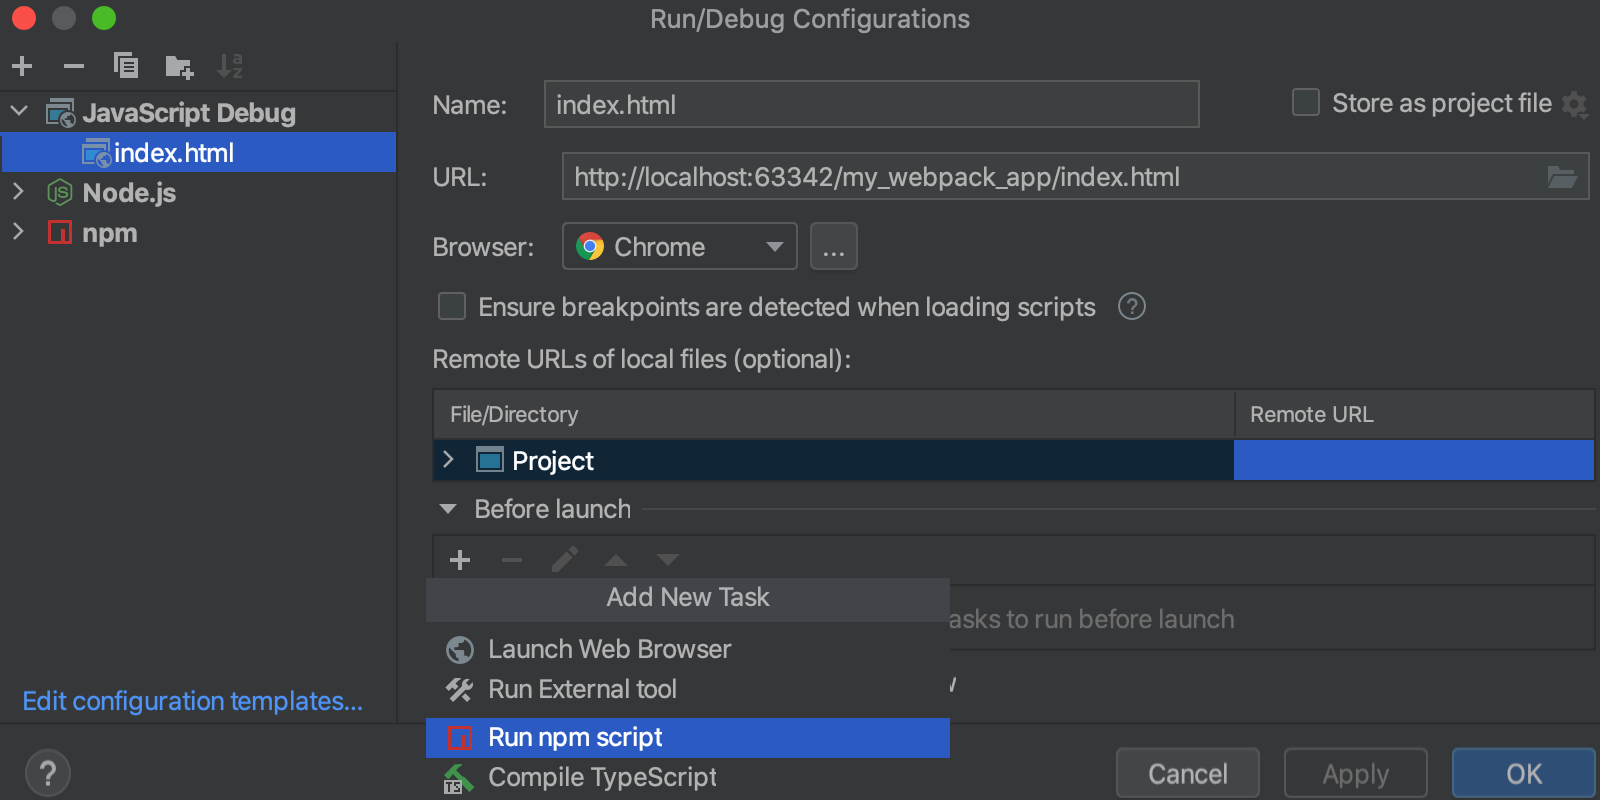 Add Before Launch task: select Run npm script